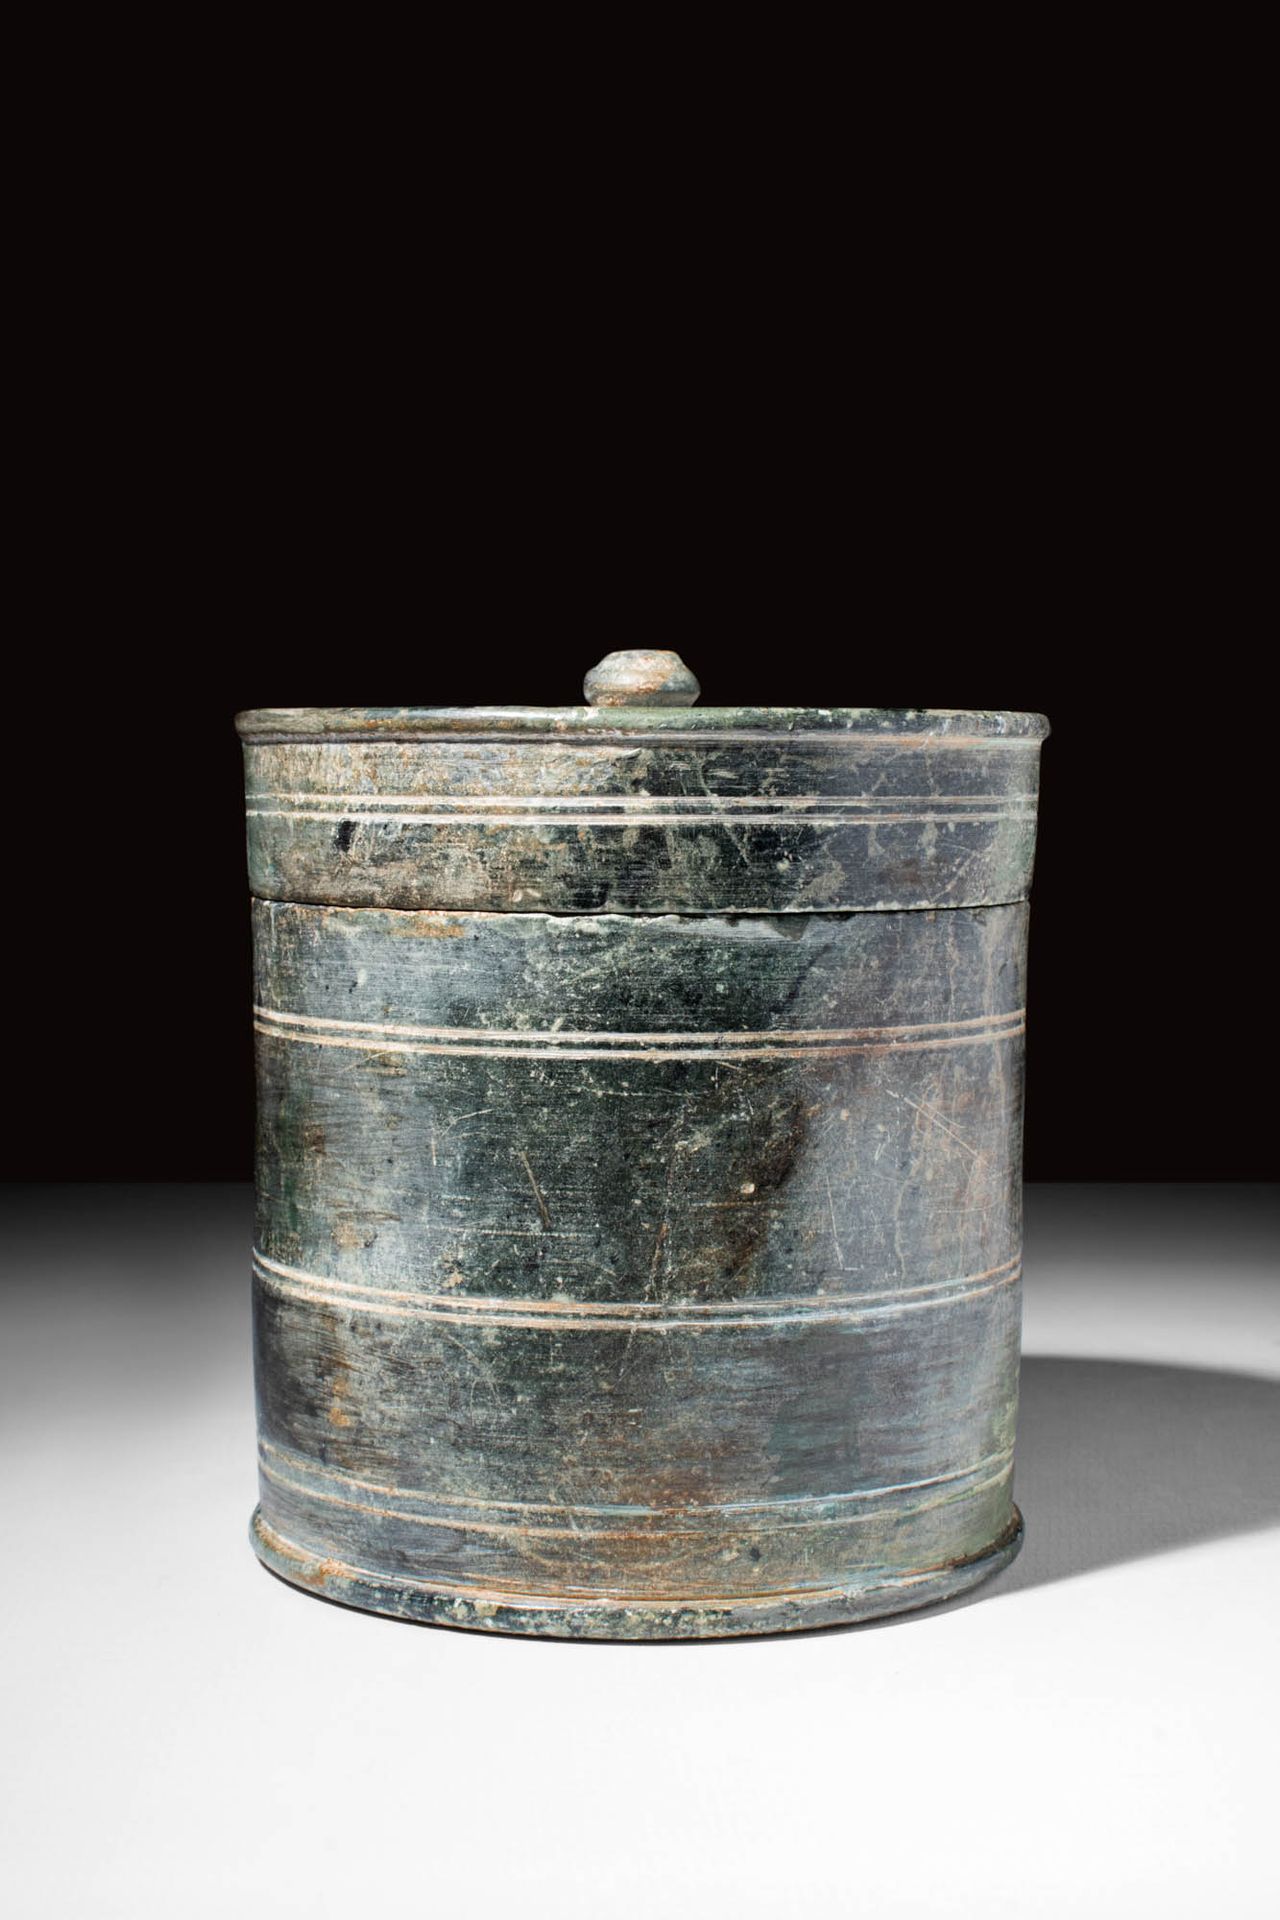 HELLENISTIC STONE PYXIS 约公元前 400 - 200 年。约公元前 400 - 200 年。
这是一个希腊化时期的绿色石制酒壶，壶身上饰&hellip;